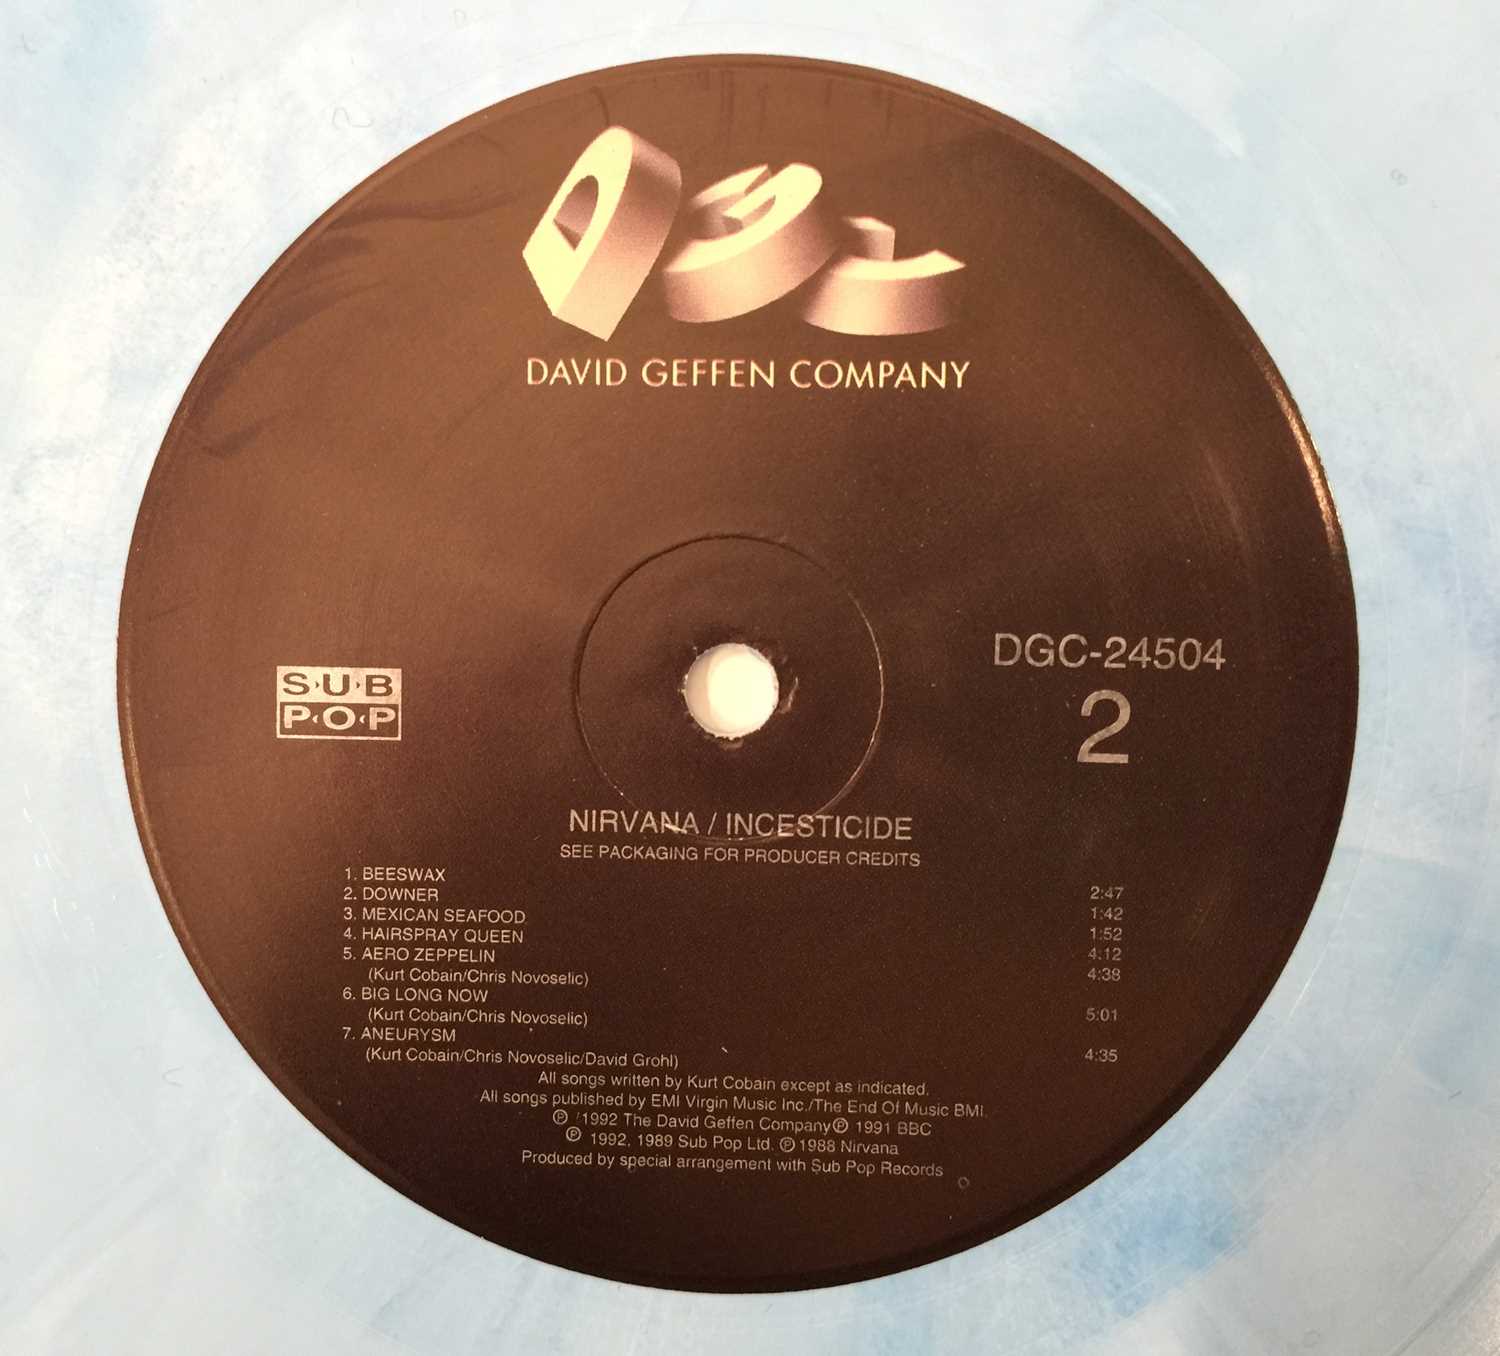 NIRVANA - INCESTICIDE LP (ORIGINAL US 1992 BLUE SWIRL PRESSING - GEFFEN DGC-24504) - Image 5 of 5